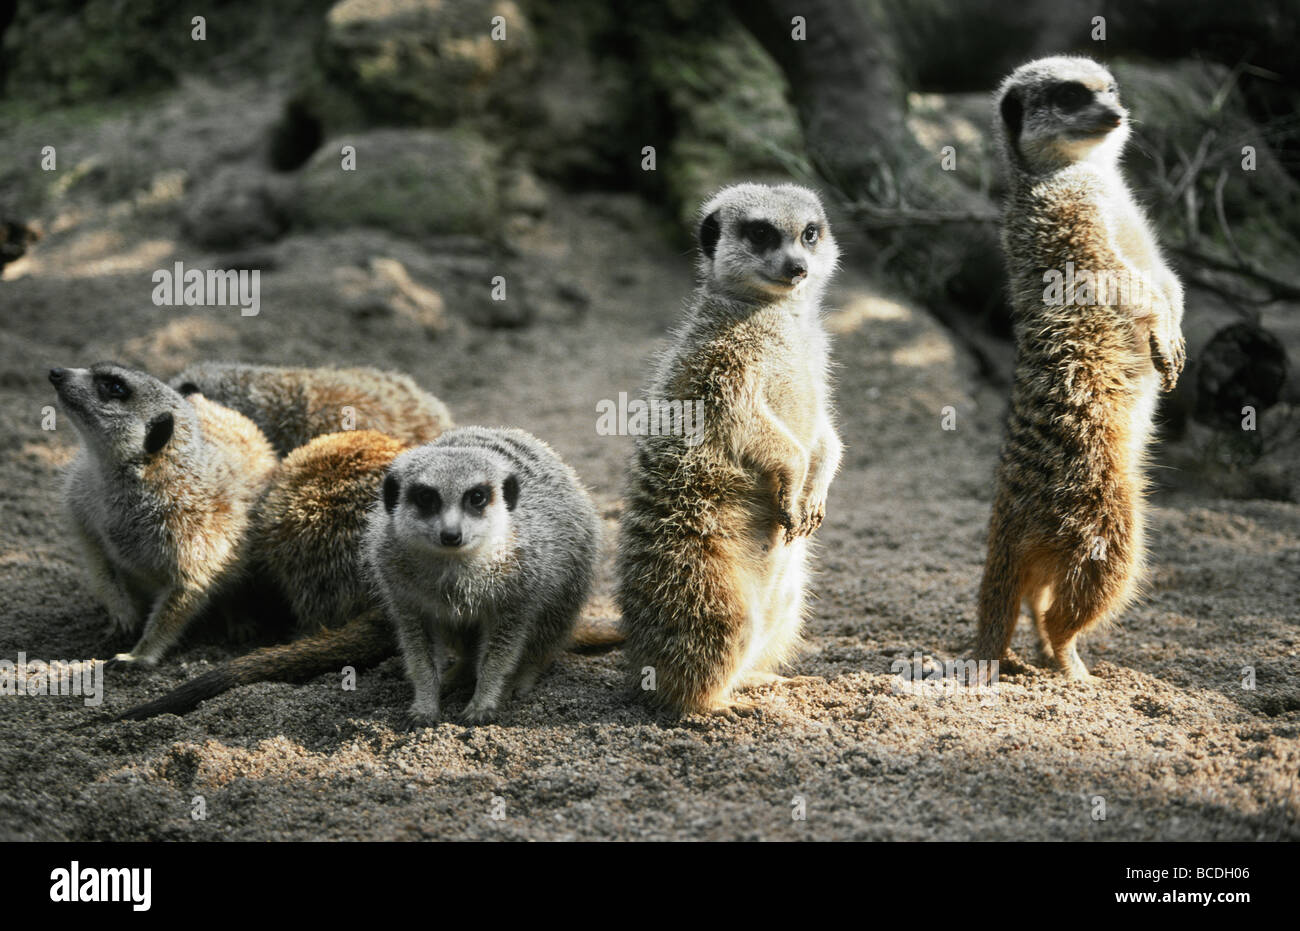 A Meerkat alert and proud surveys it's territory for predators. Stock Photo